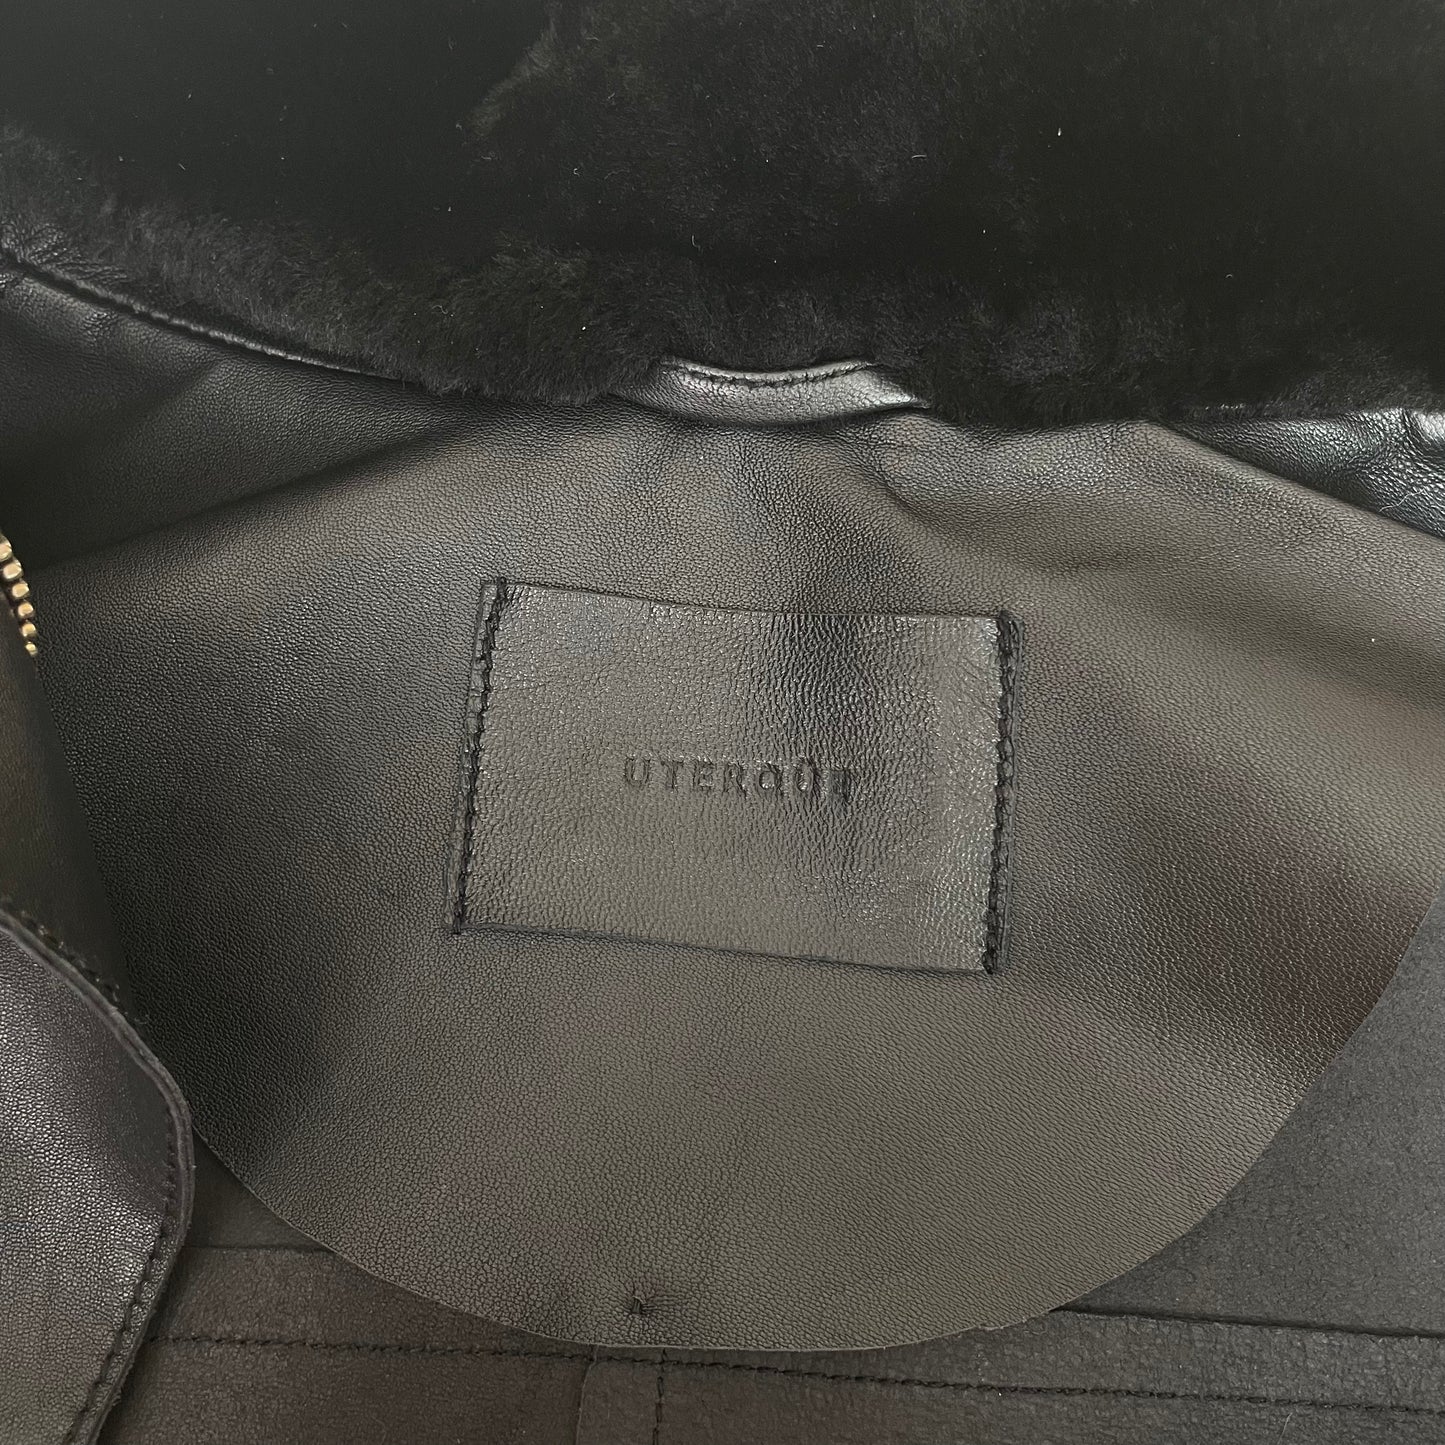 Long Black Leather Coat - S